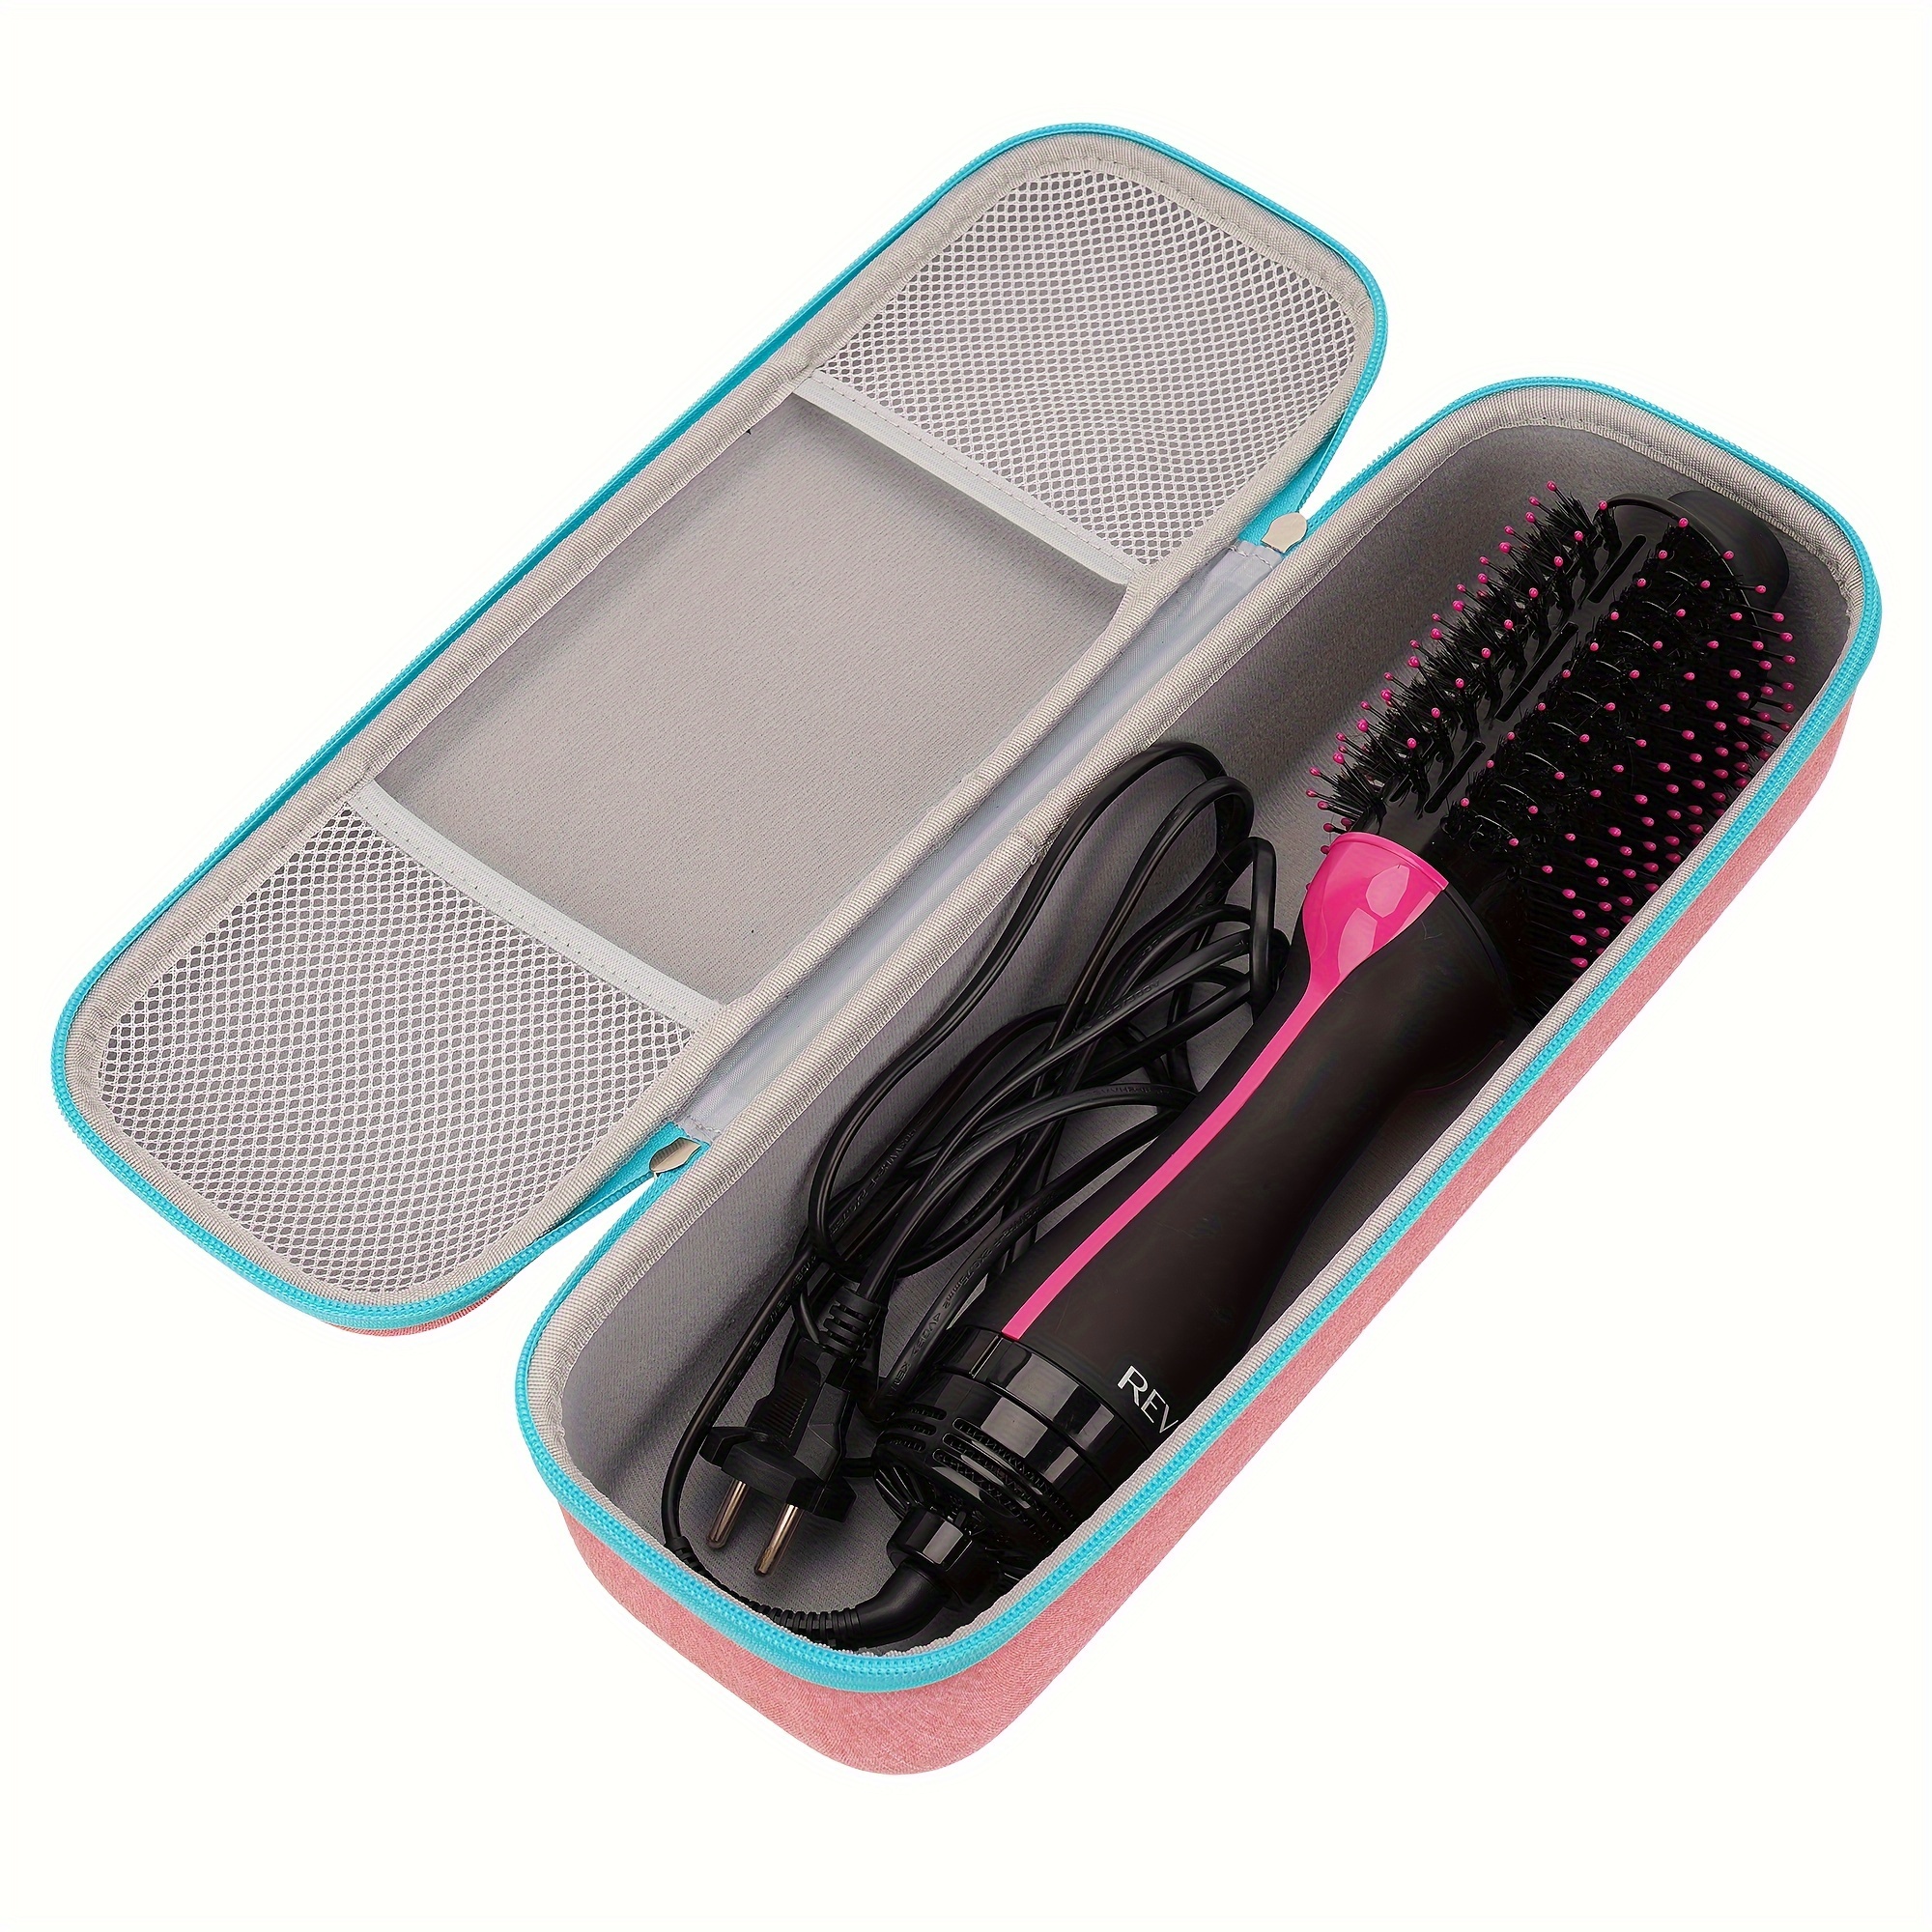 REVLON One-Step Original 1.0 - Secadora, voluminizador de cabello y cepillo  de aire caliente, color rosa